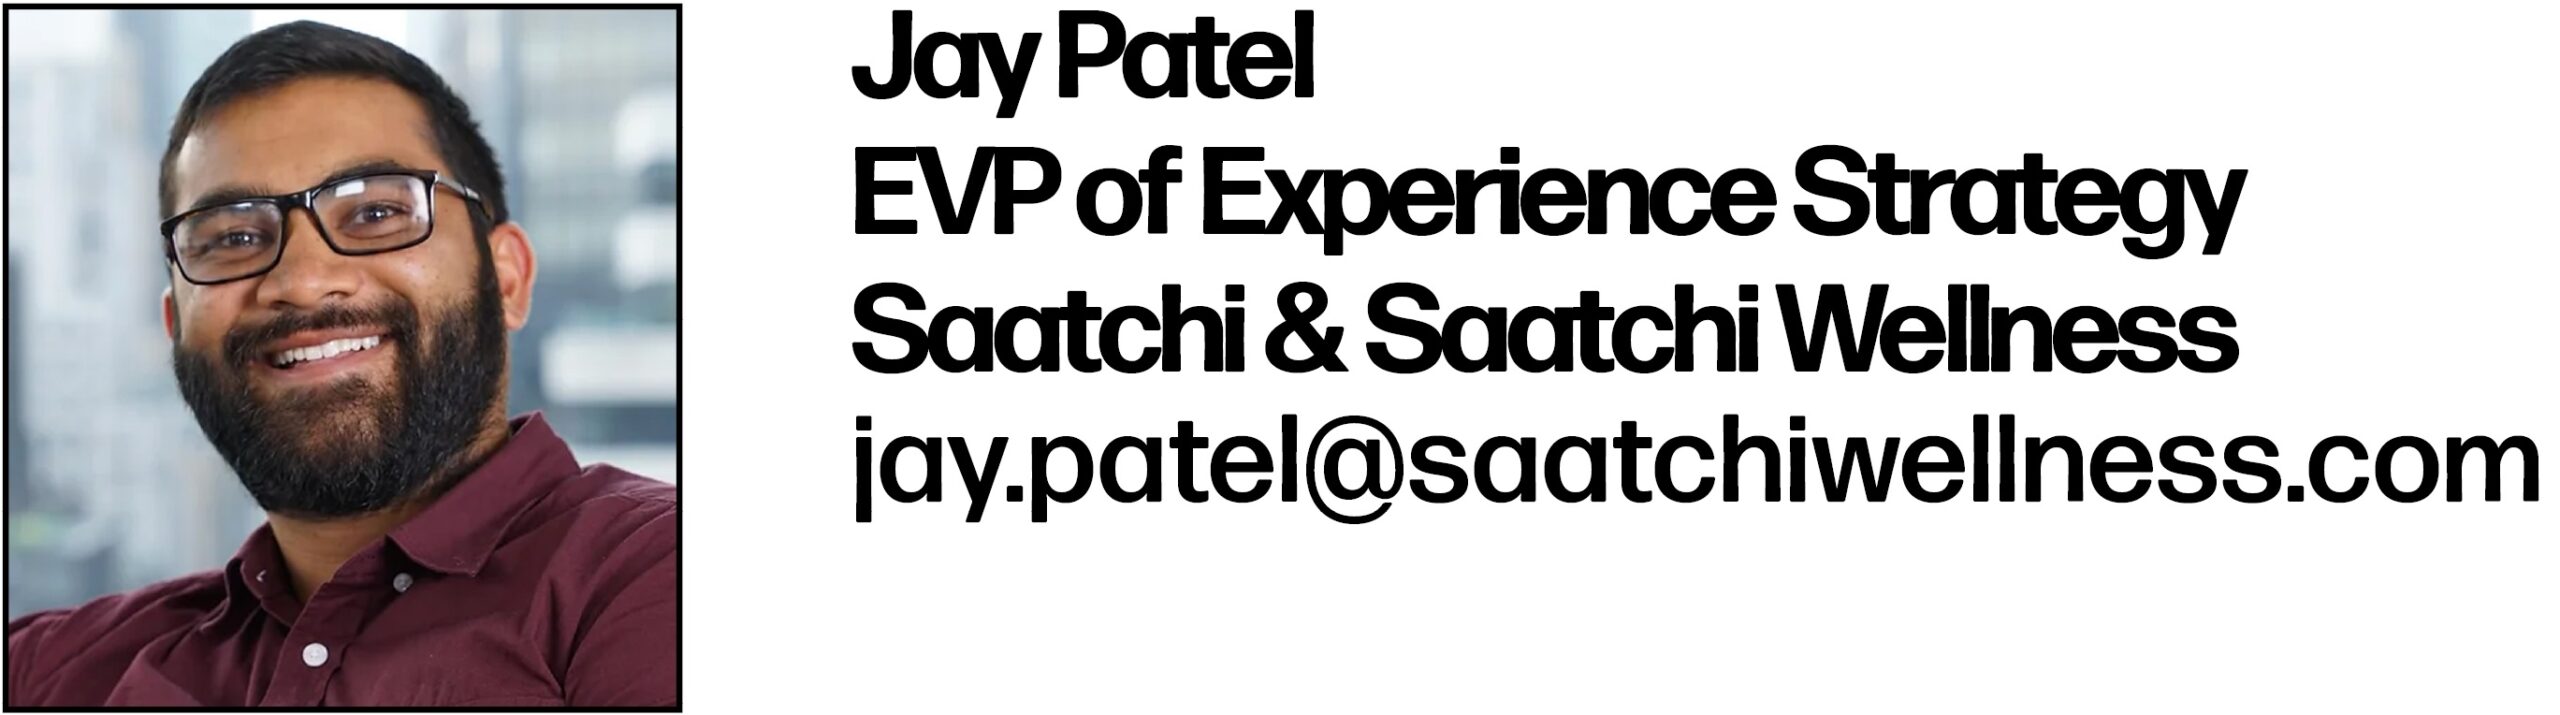 Jay Patel
EVP of Experience Strategy
Saatchi & Saatchi Wellness
jay.patel@saatchiwellness.com 